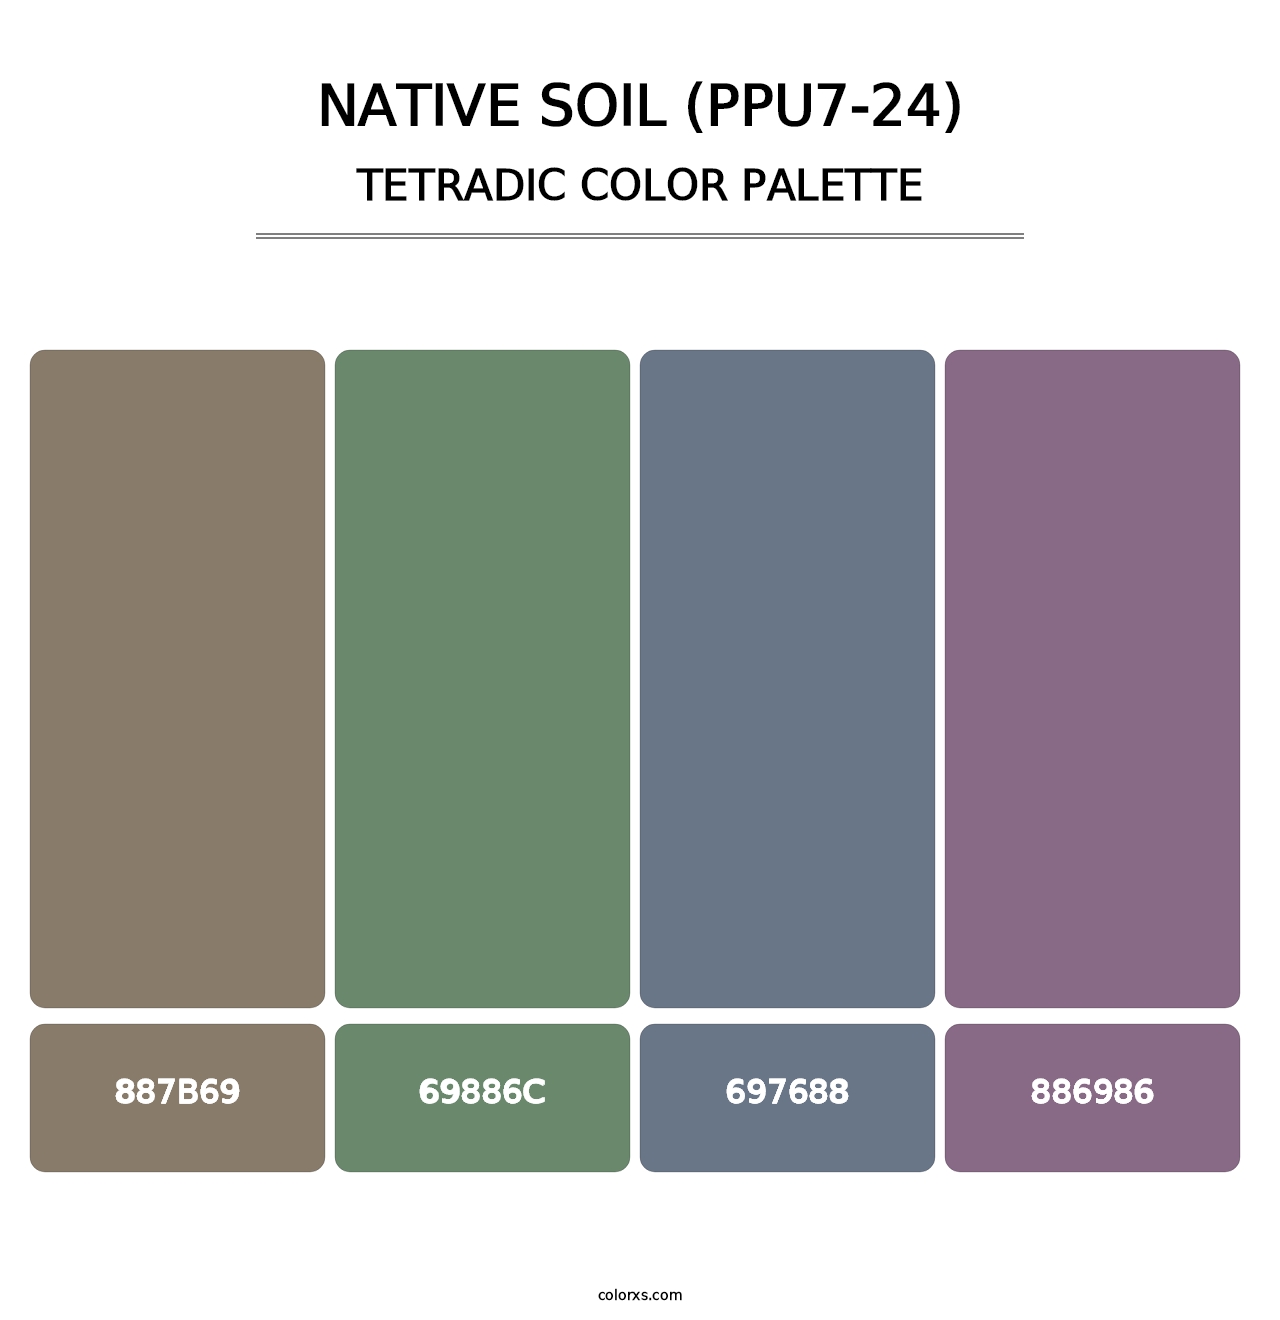 Native Soil (PPU7-24) - Tetradic Color Palette